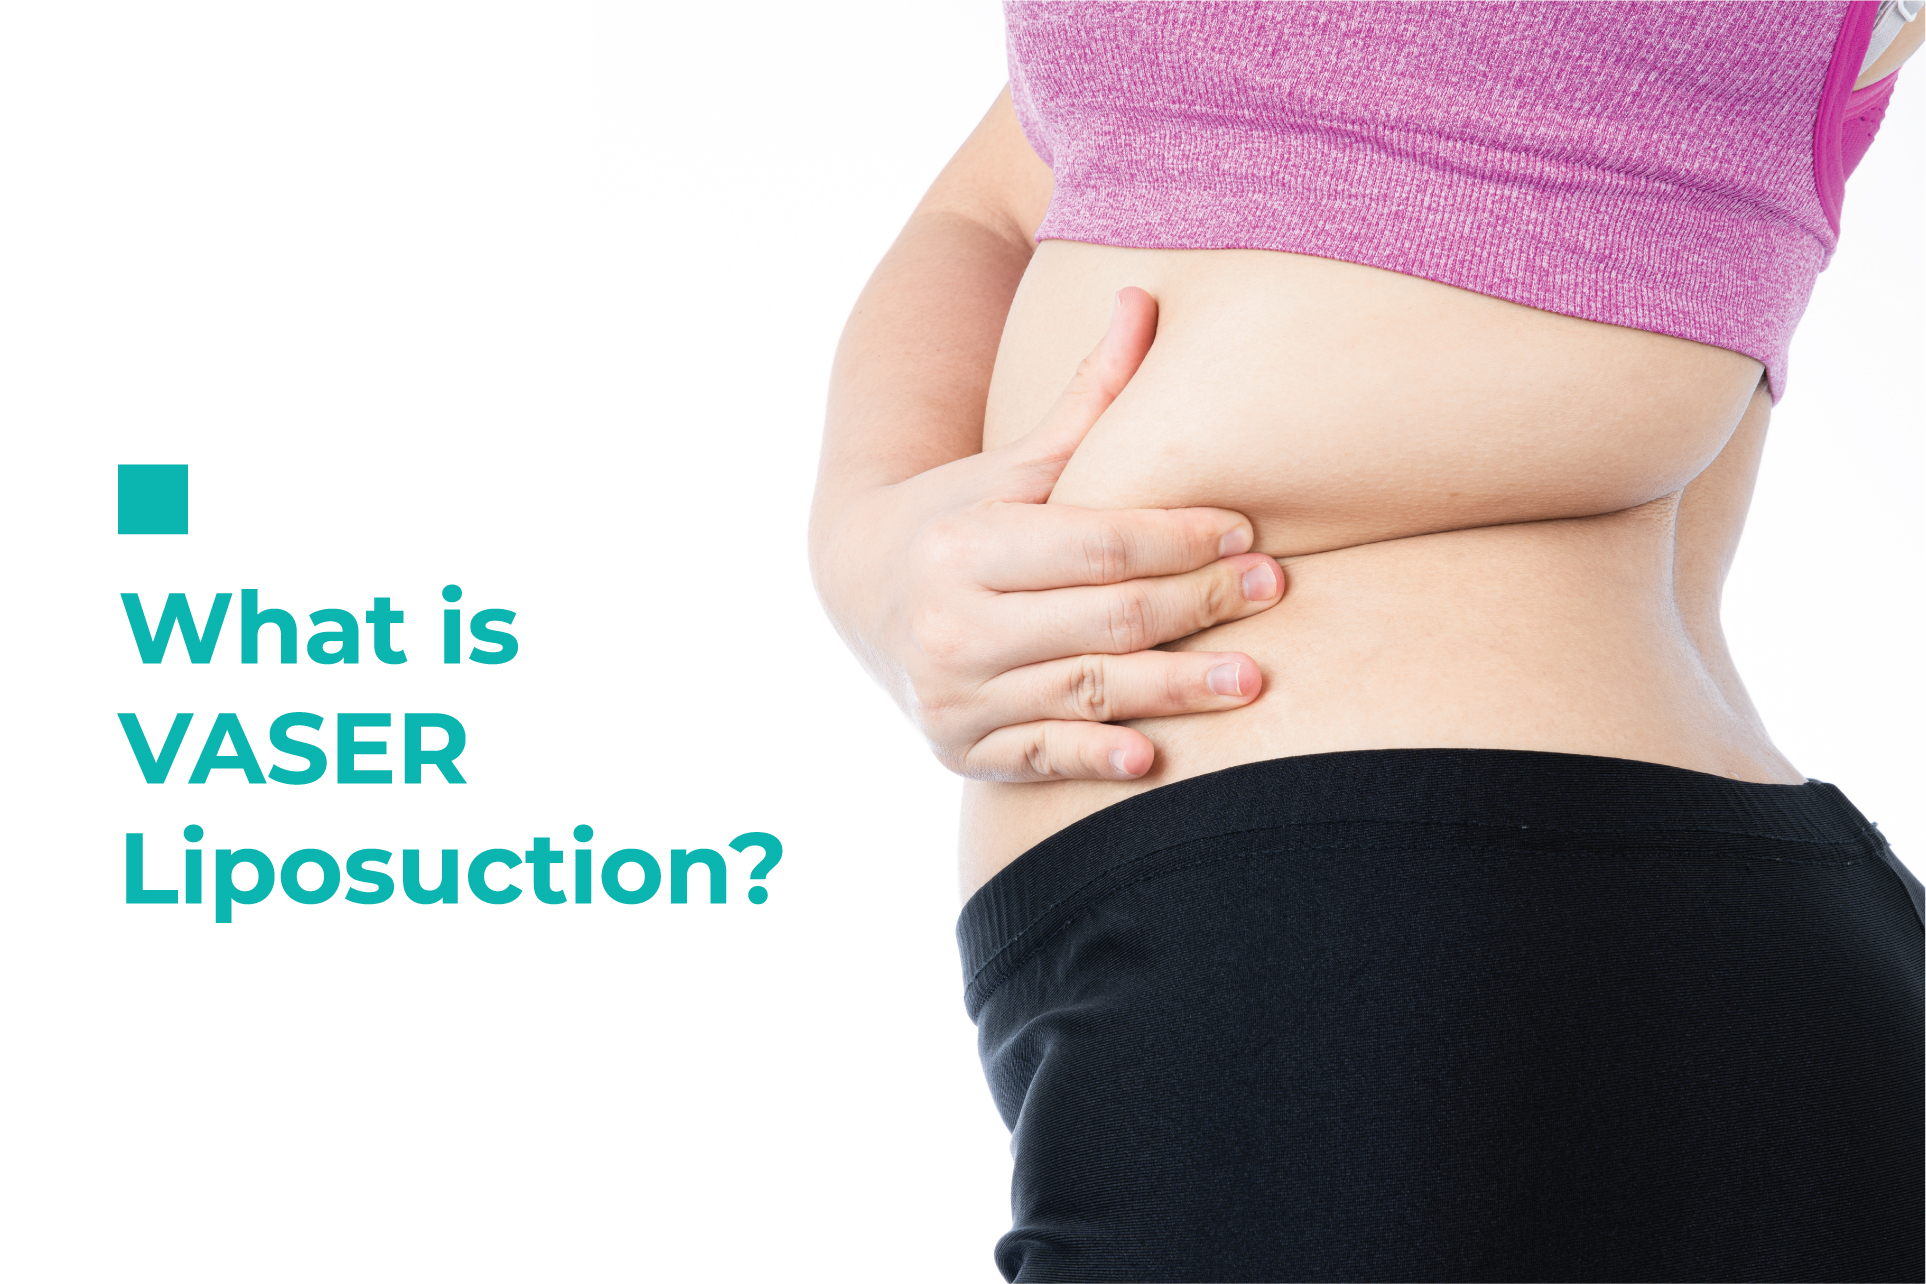 What is VASER Liposuction?